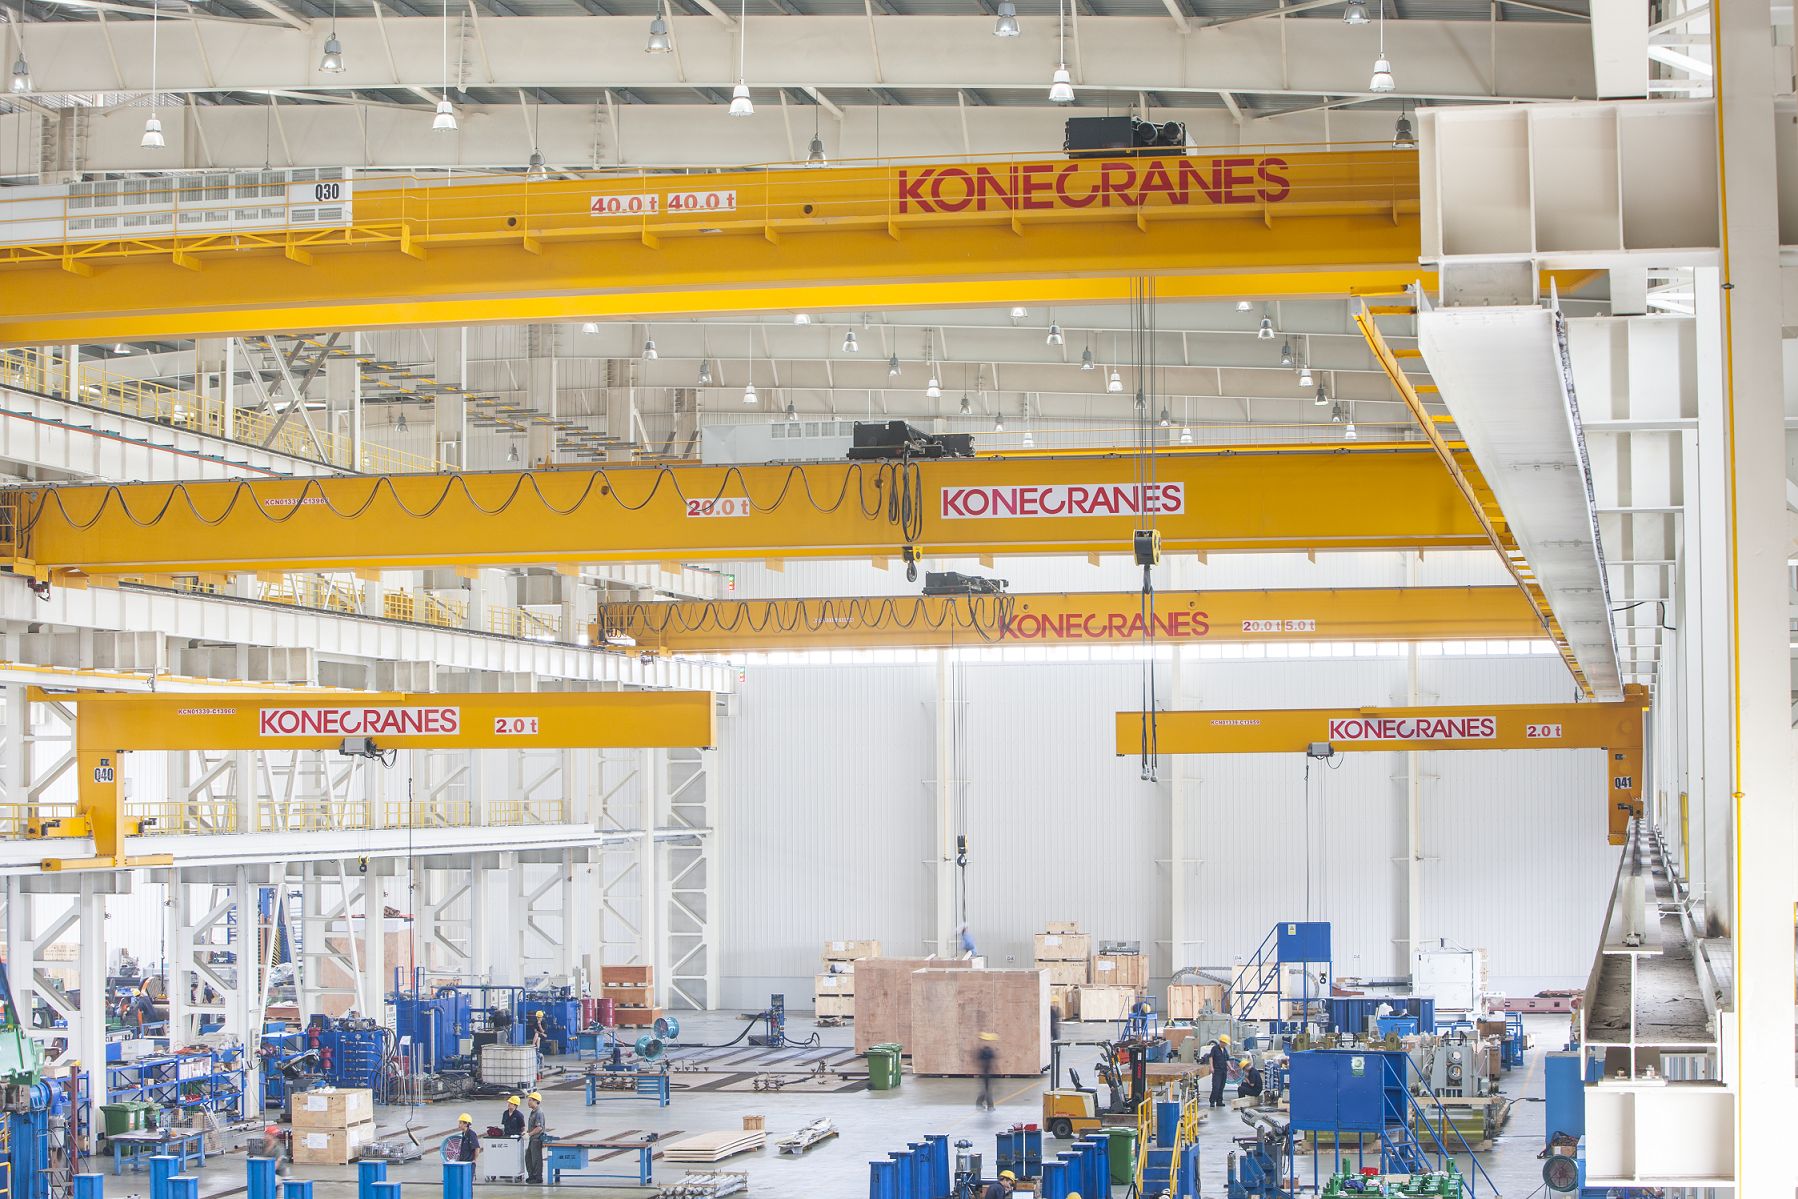 Reliable industrial crane applications from Konecranes | Ins-news